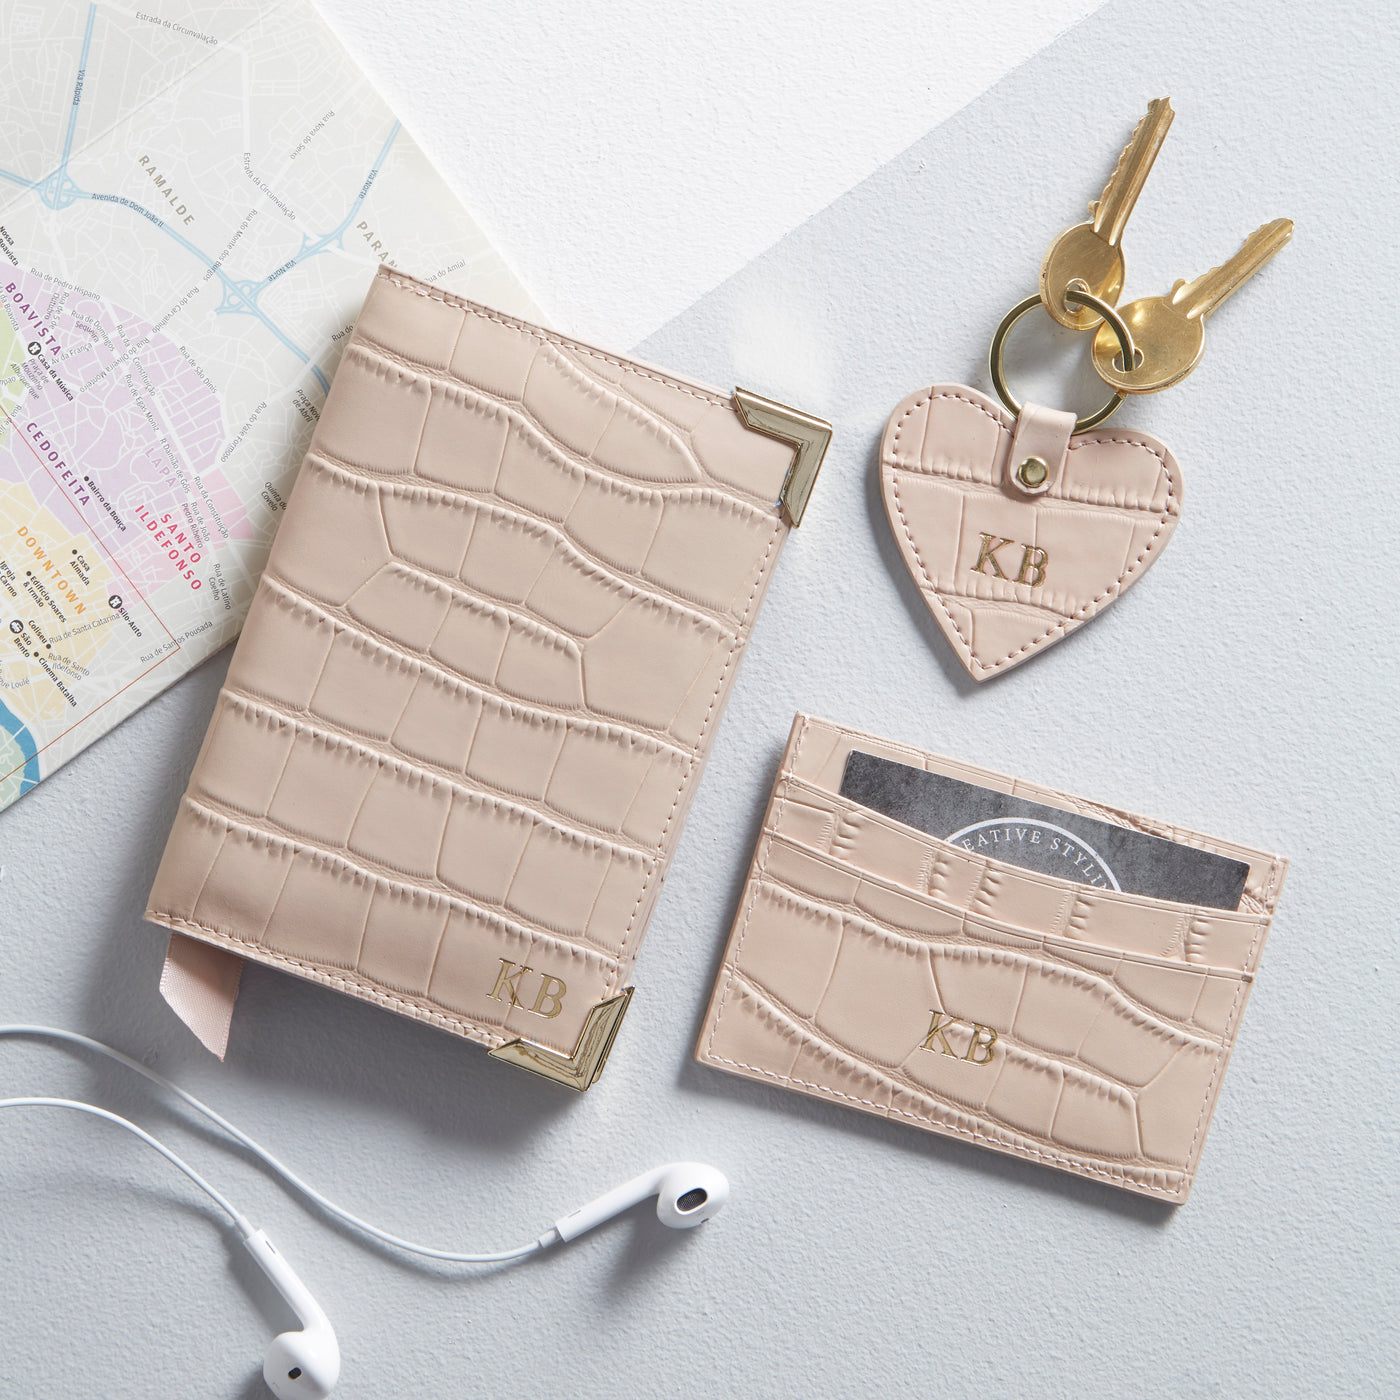 bespoke leather travel set: passport holder, card holder and keyring personalised